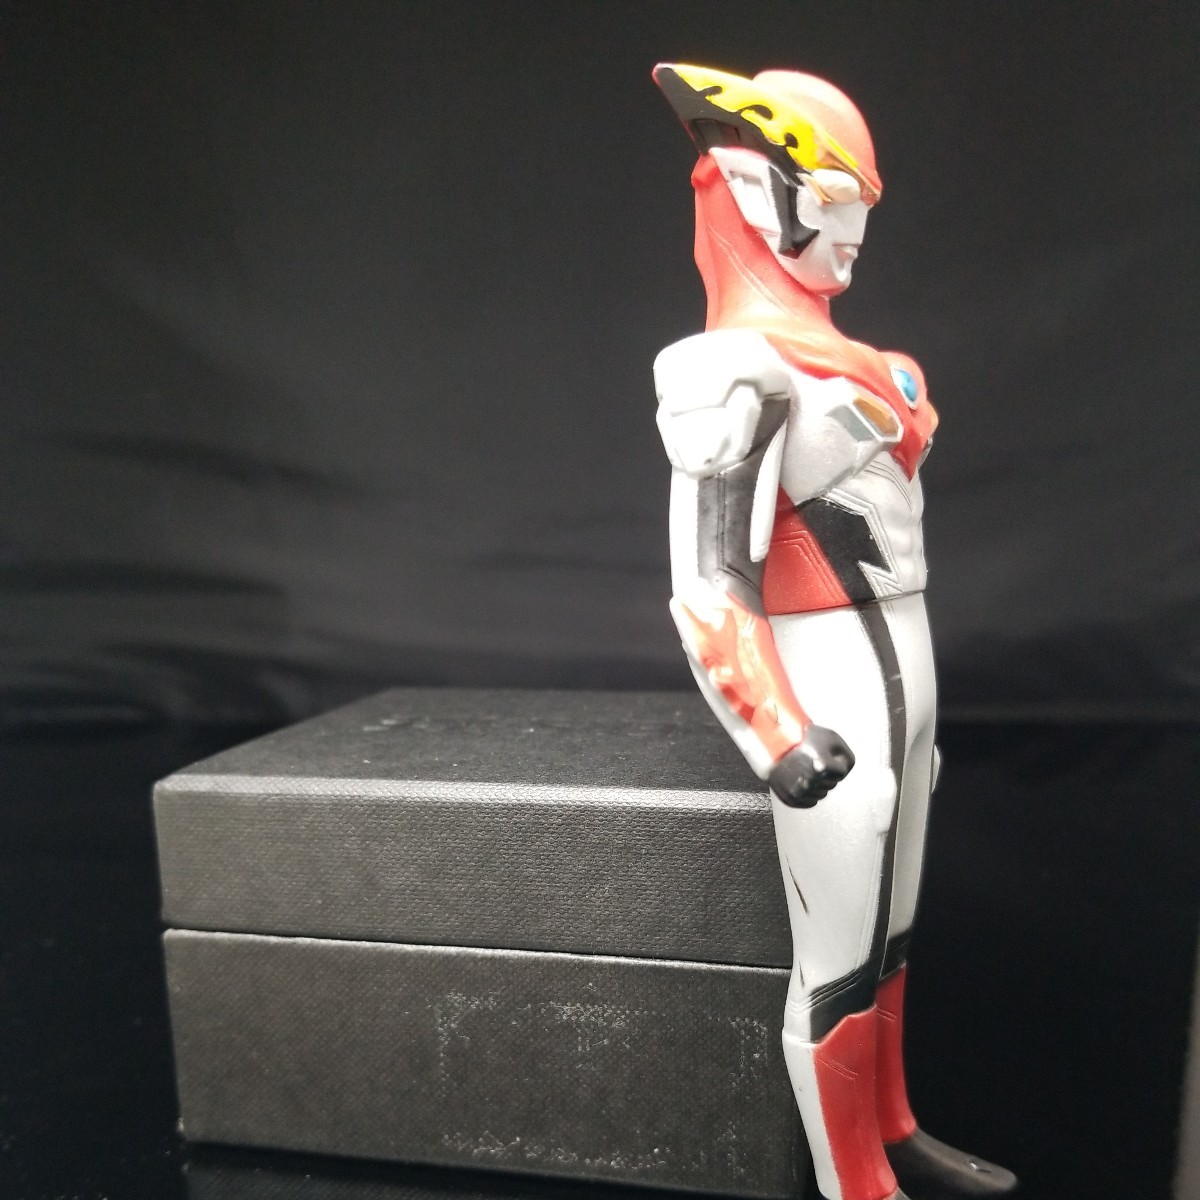  Bandai иен . Pro Ultraman Ultraman rosso f Ray m изображение . полностью. перед ставкой. обязательно описание товара . прочитайте пожалуйста 